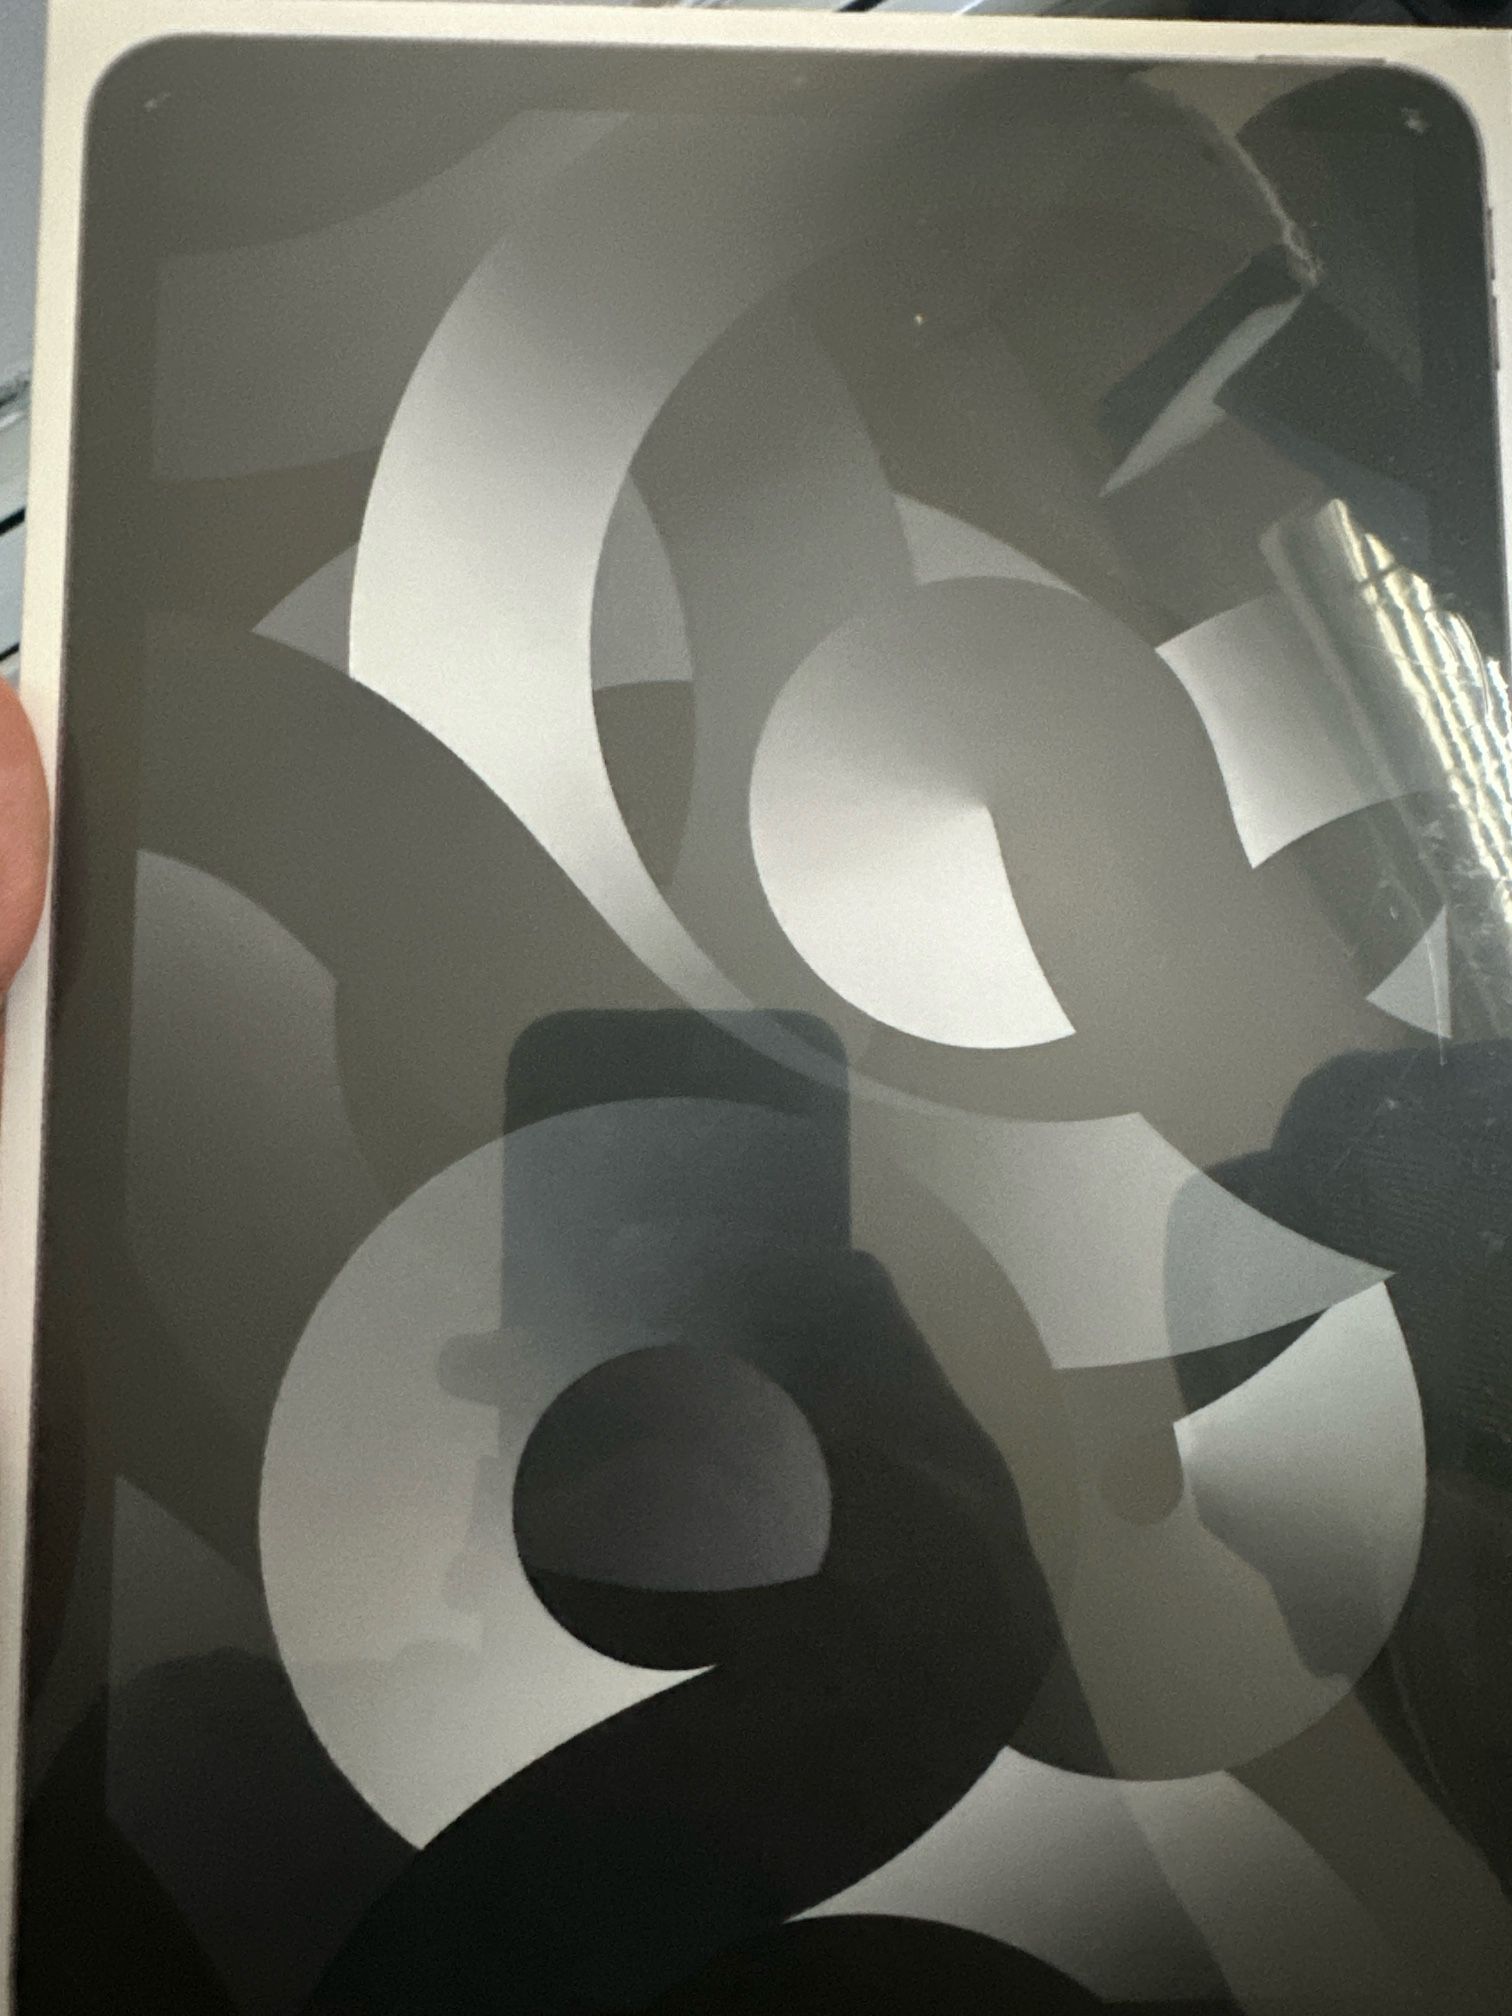 2022 Apple 10.9-inch iPad Air Wi-Fi 256GB - Space Gray (5th Generation) 